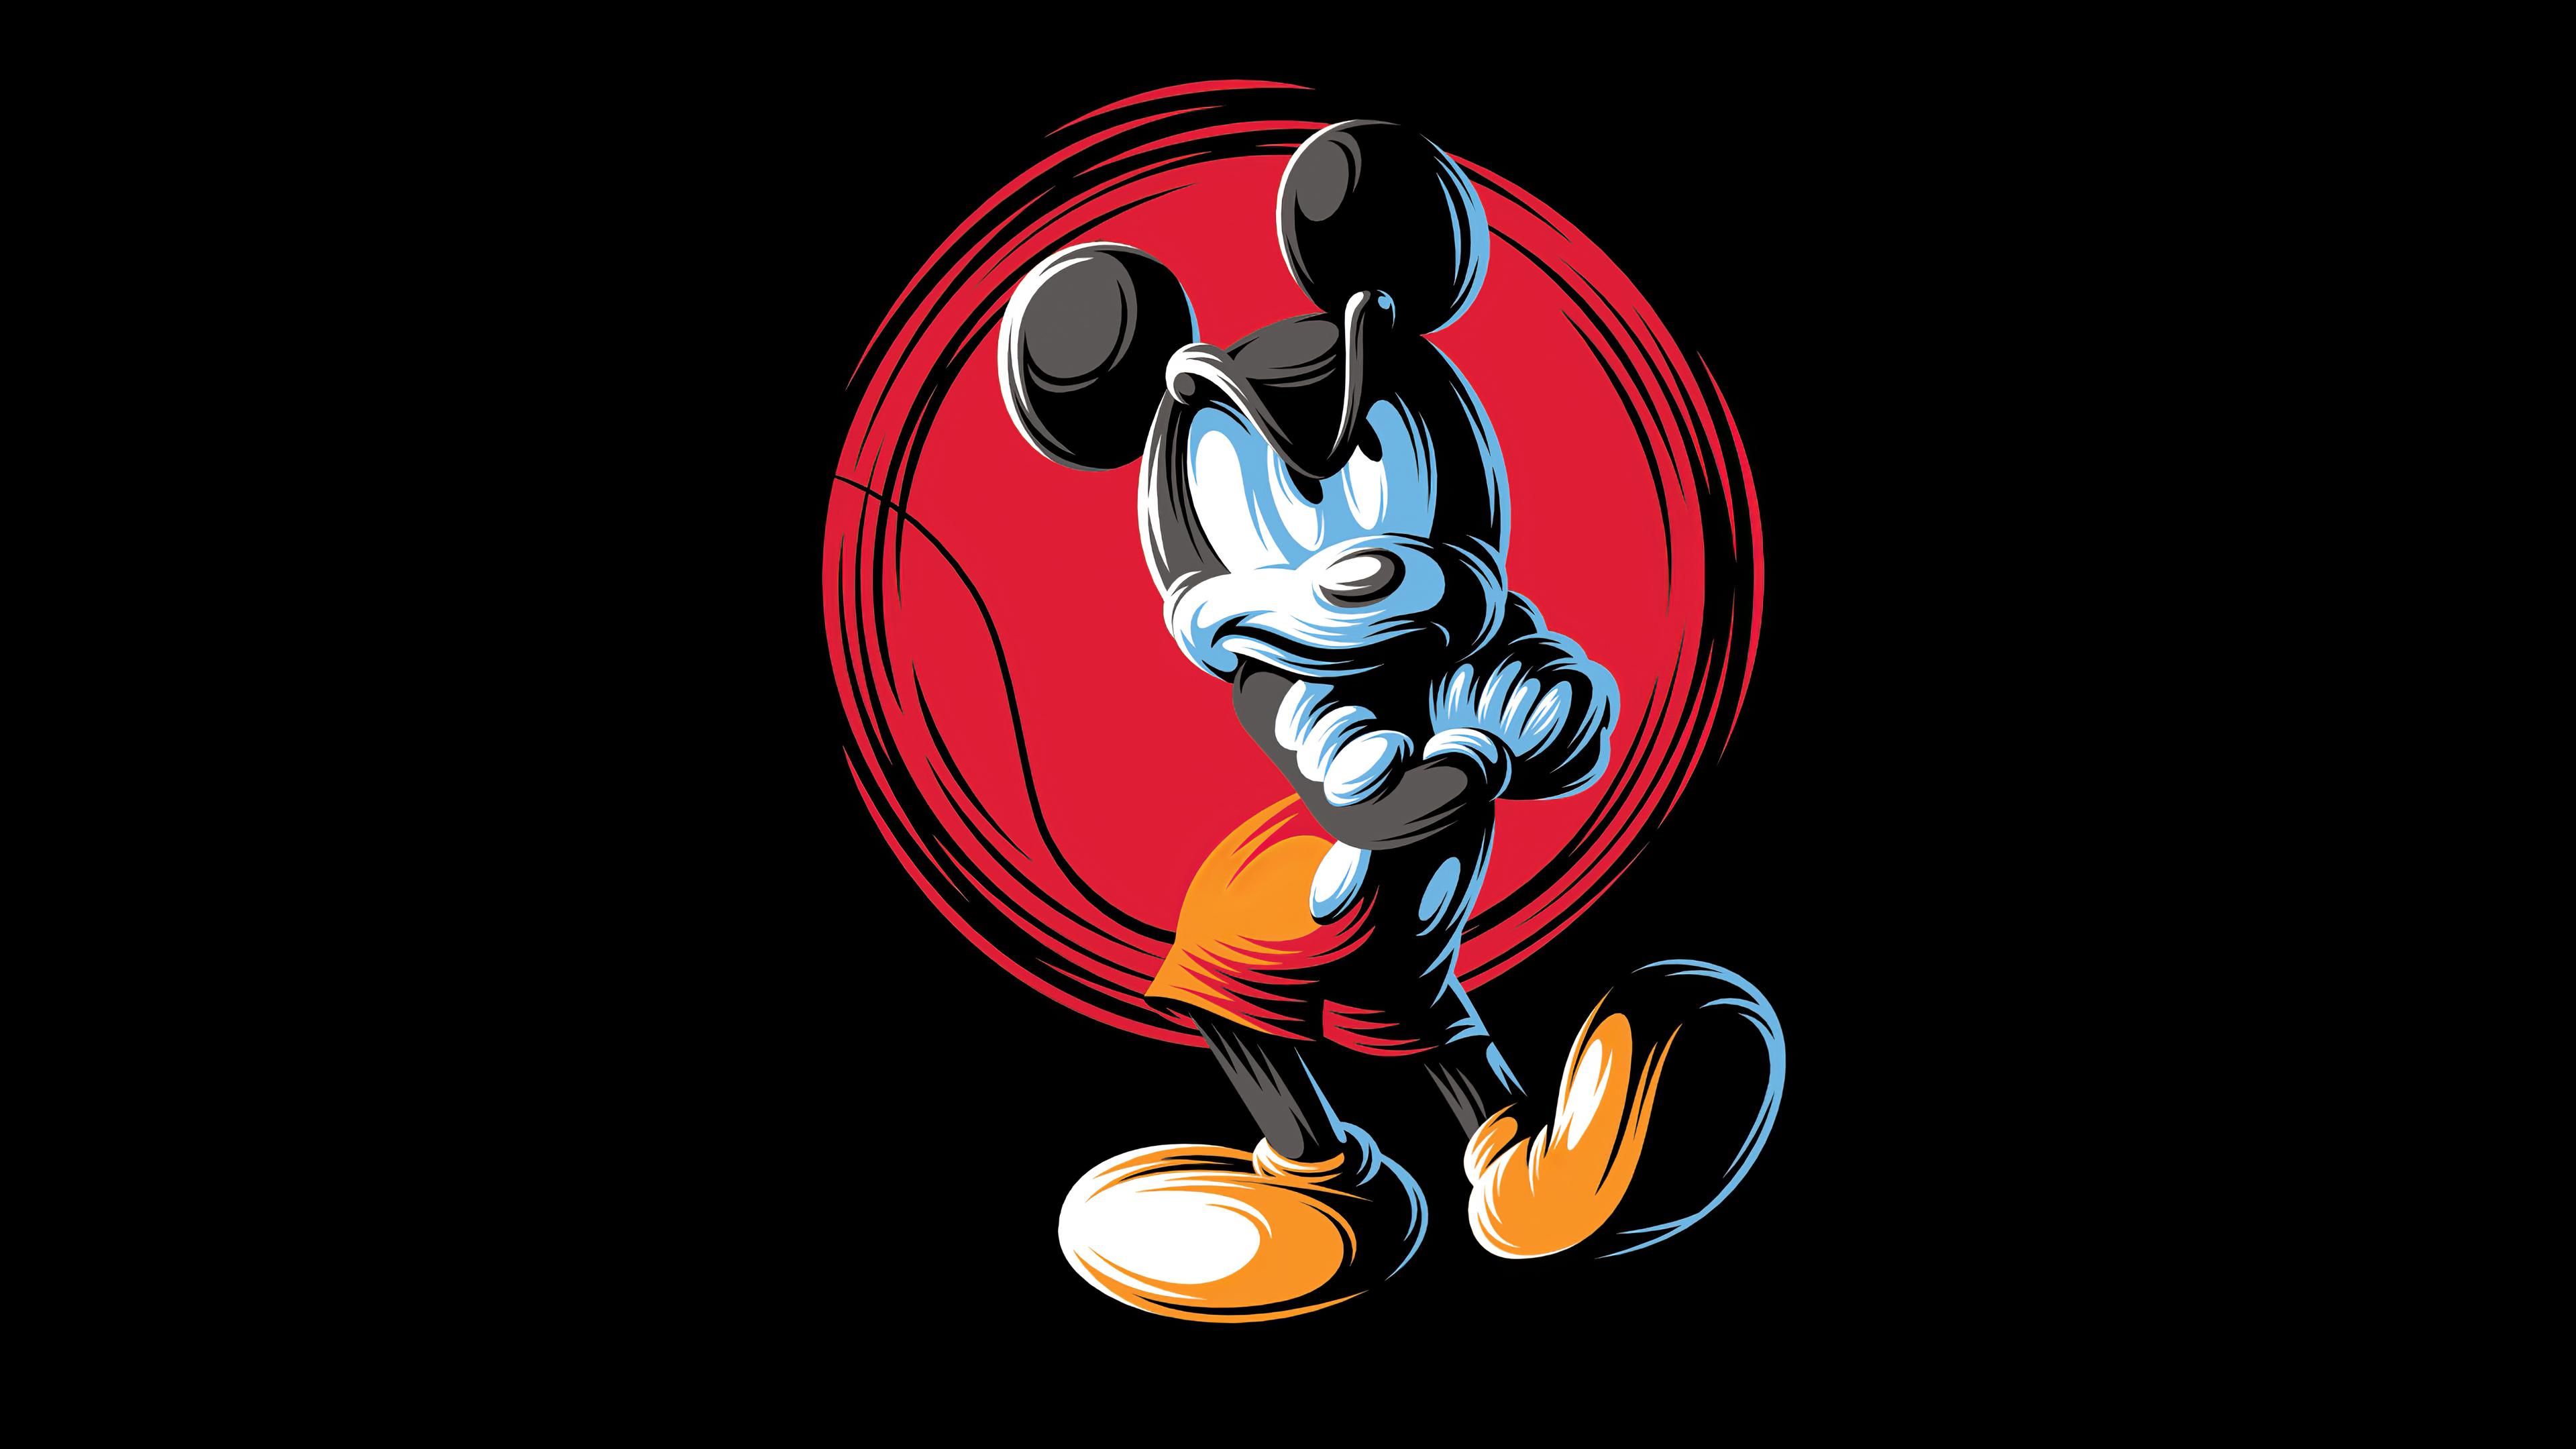 3840 x 2160 · jpeg - Mickey Mouse Minimal Art 4k, HD Cartoons, 4k Wallpapers, Images ...